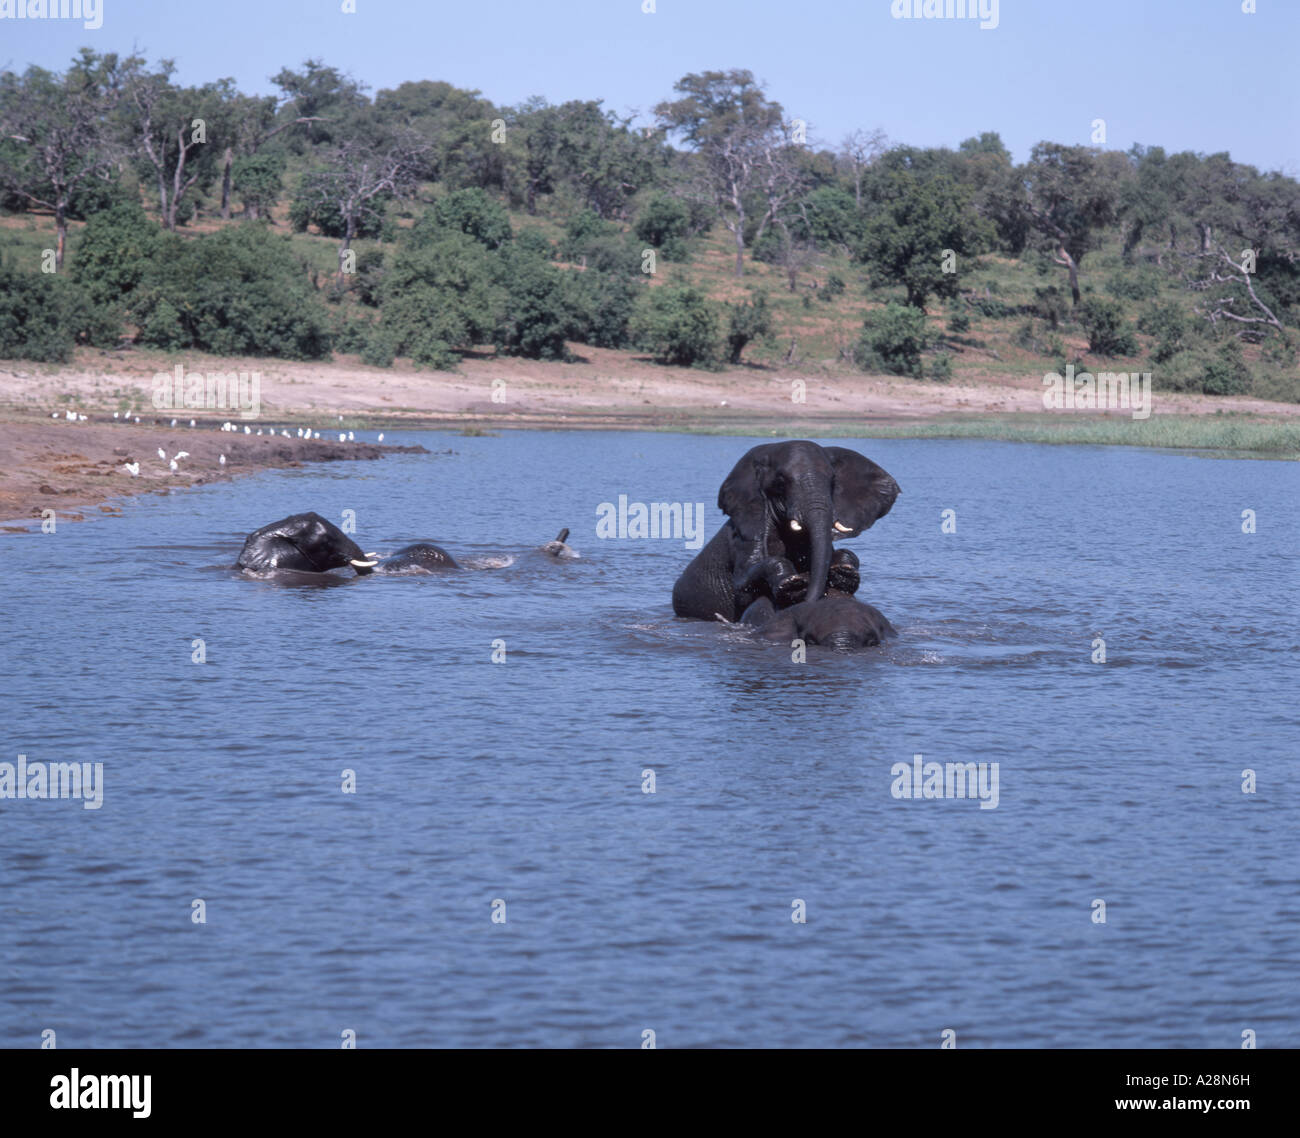 Elephants Playing In River, Chobe National Park, Chobe, Republic of Botswana Stock Photo